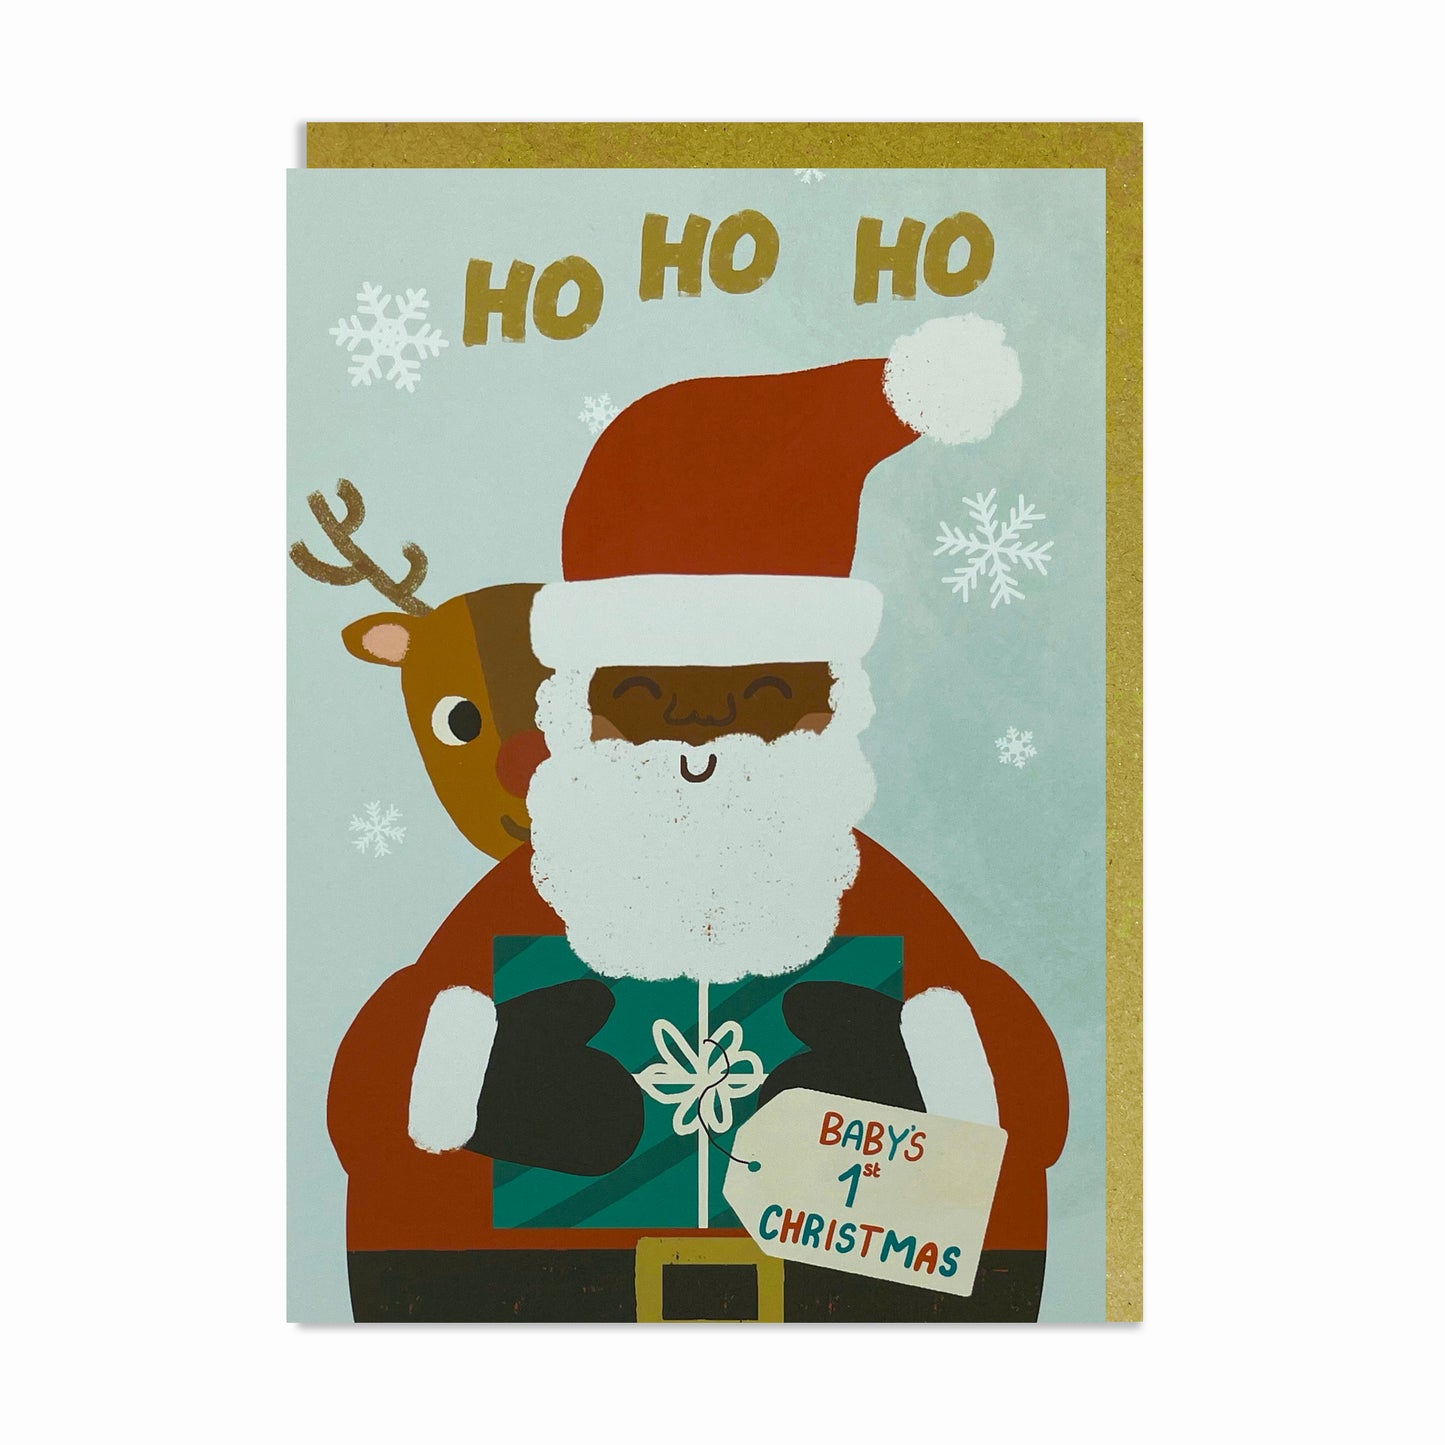 Black Santa holding a Christmas present, with Rudolph behind him. Black Christmas card.